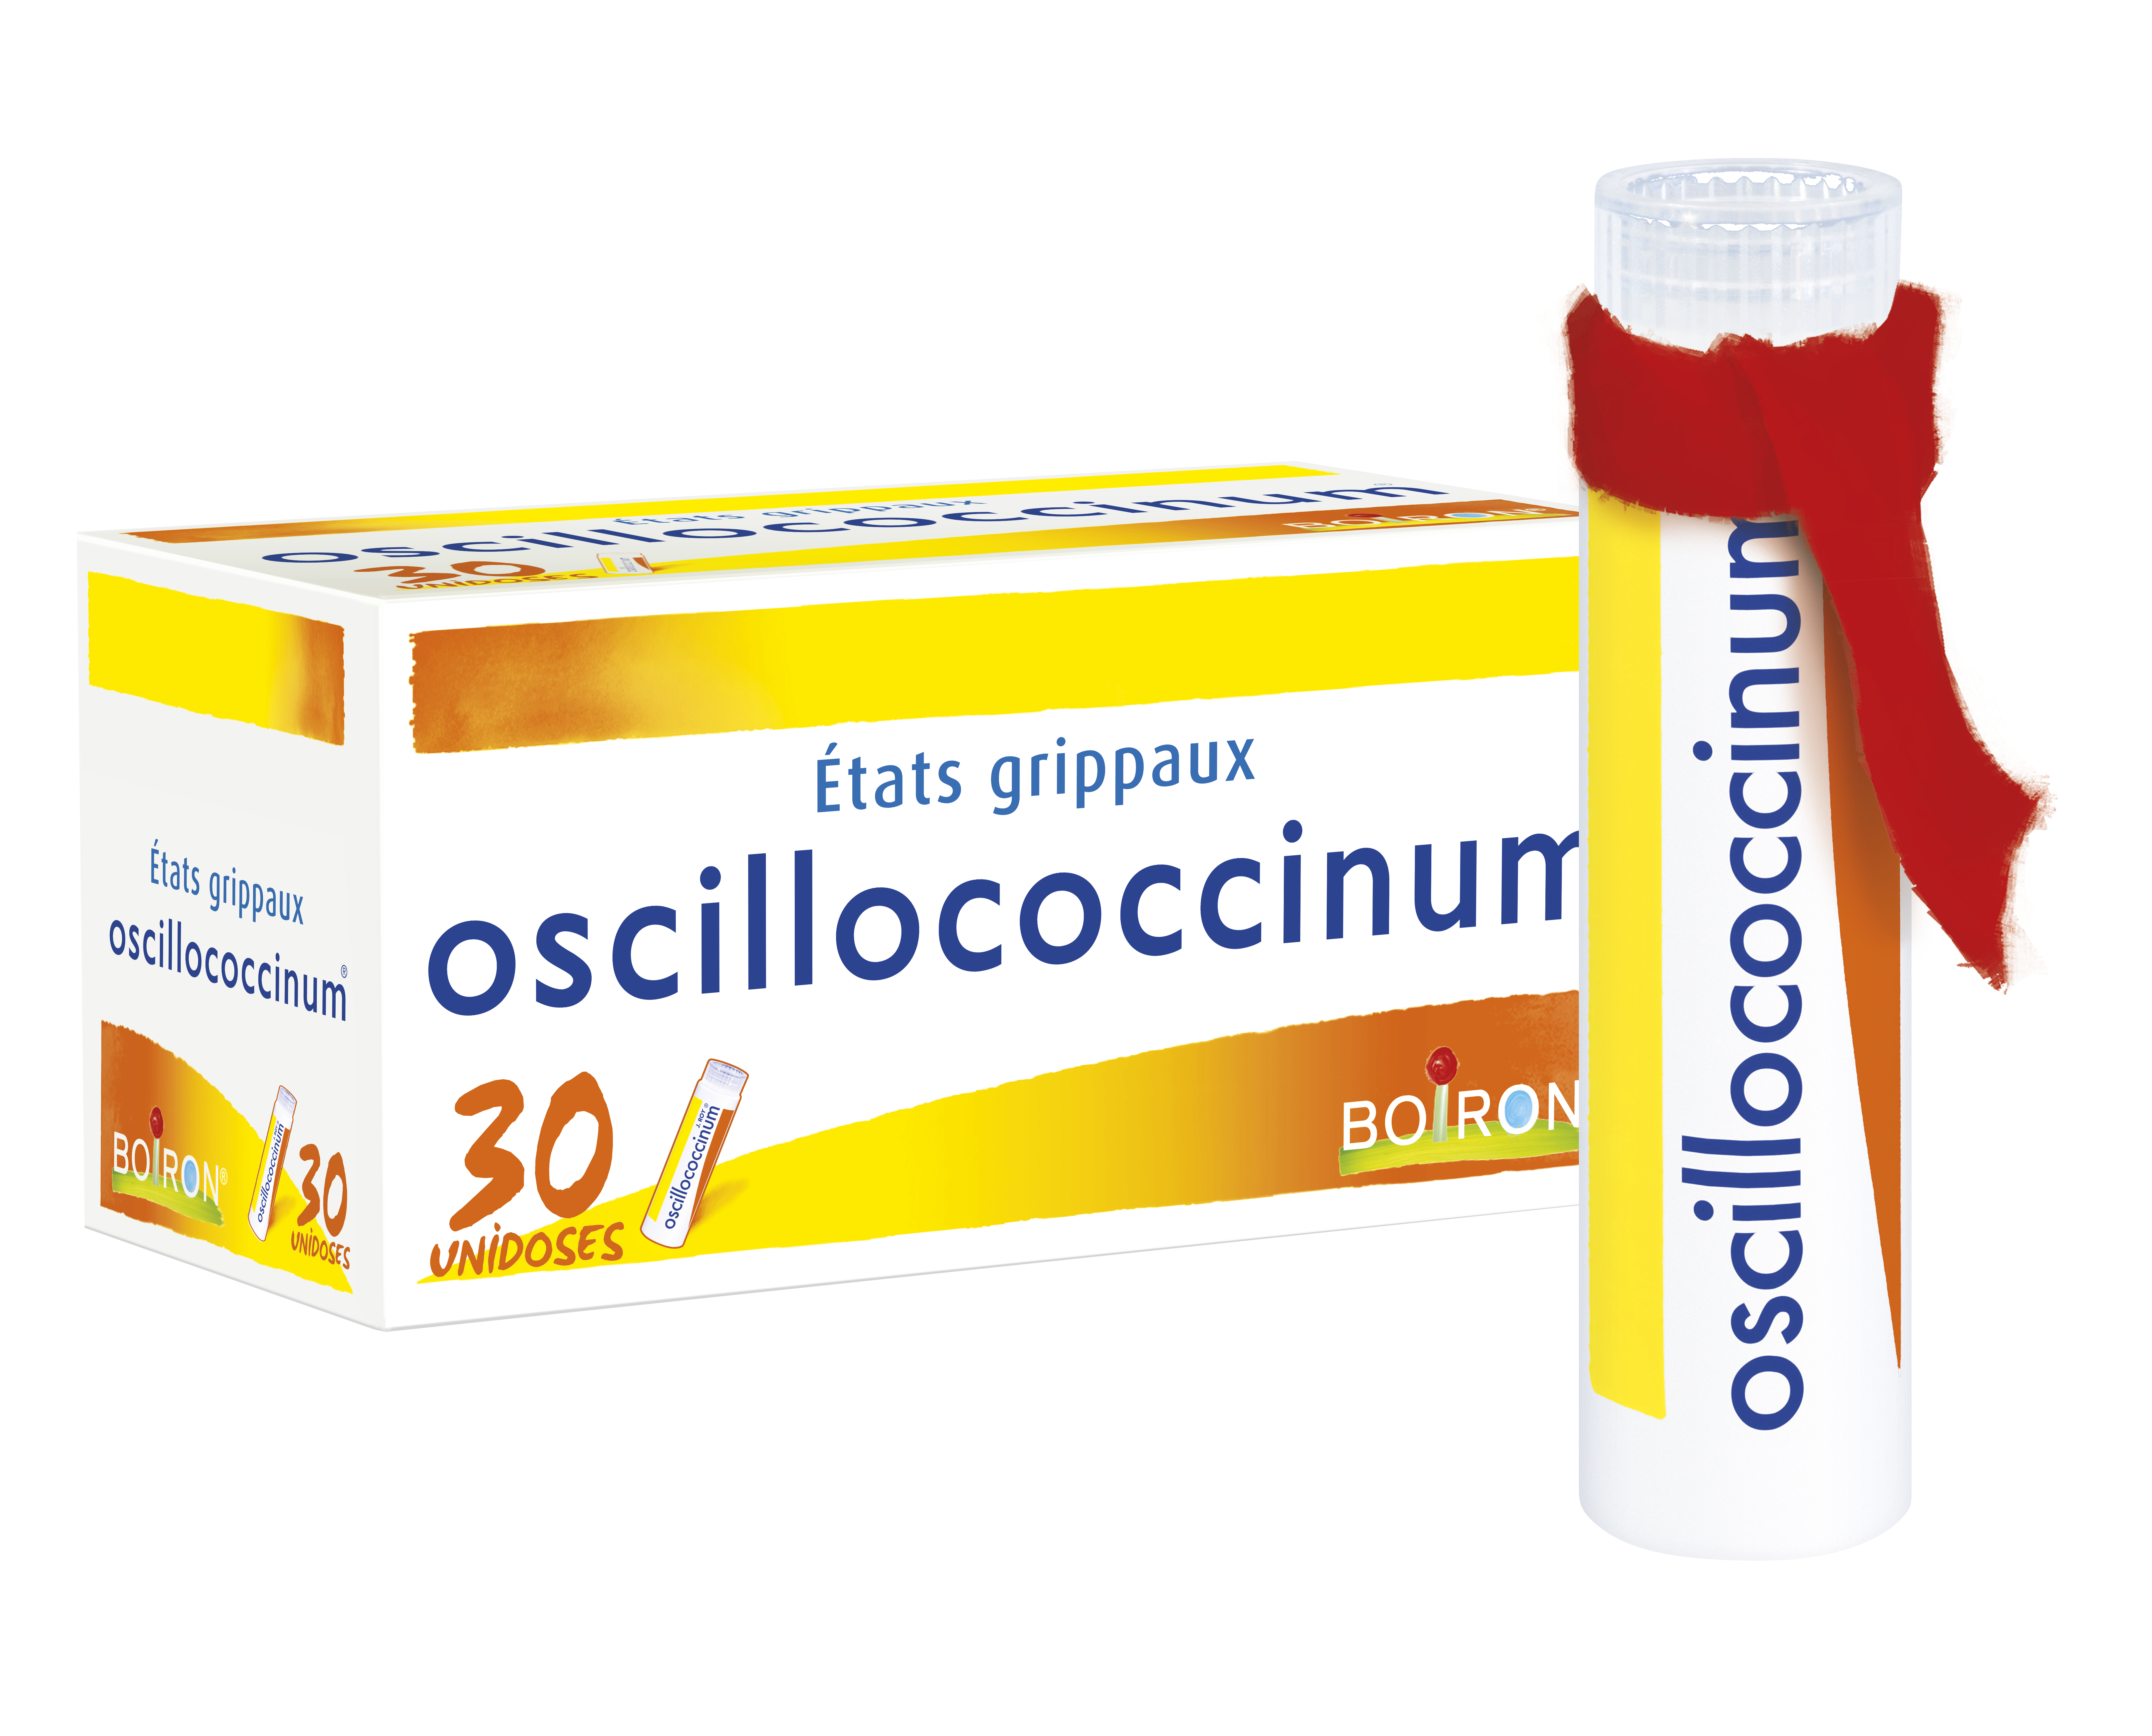 Oscillococcinum® (30 doses)